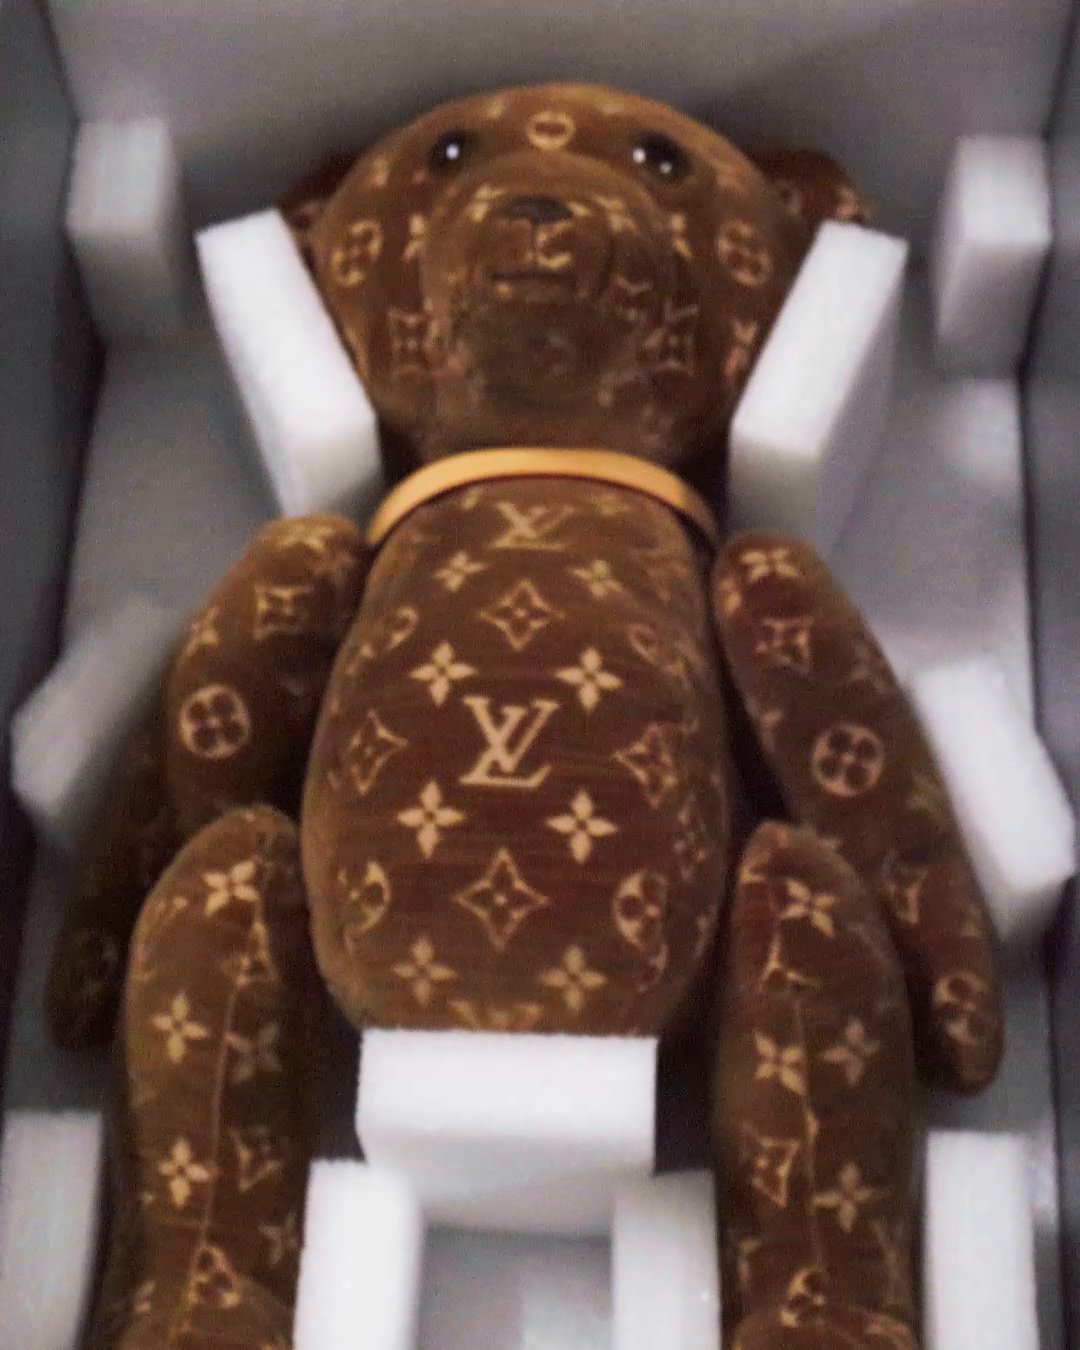 Louis Vuitton on X: #LVMenSS21 A teddy bear designed by Marc